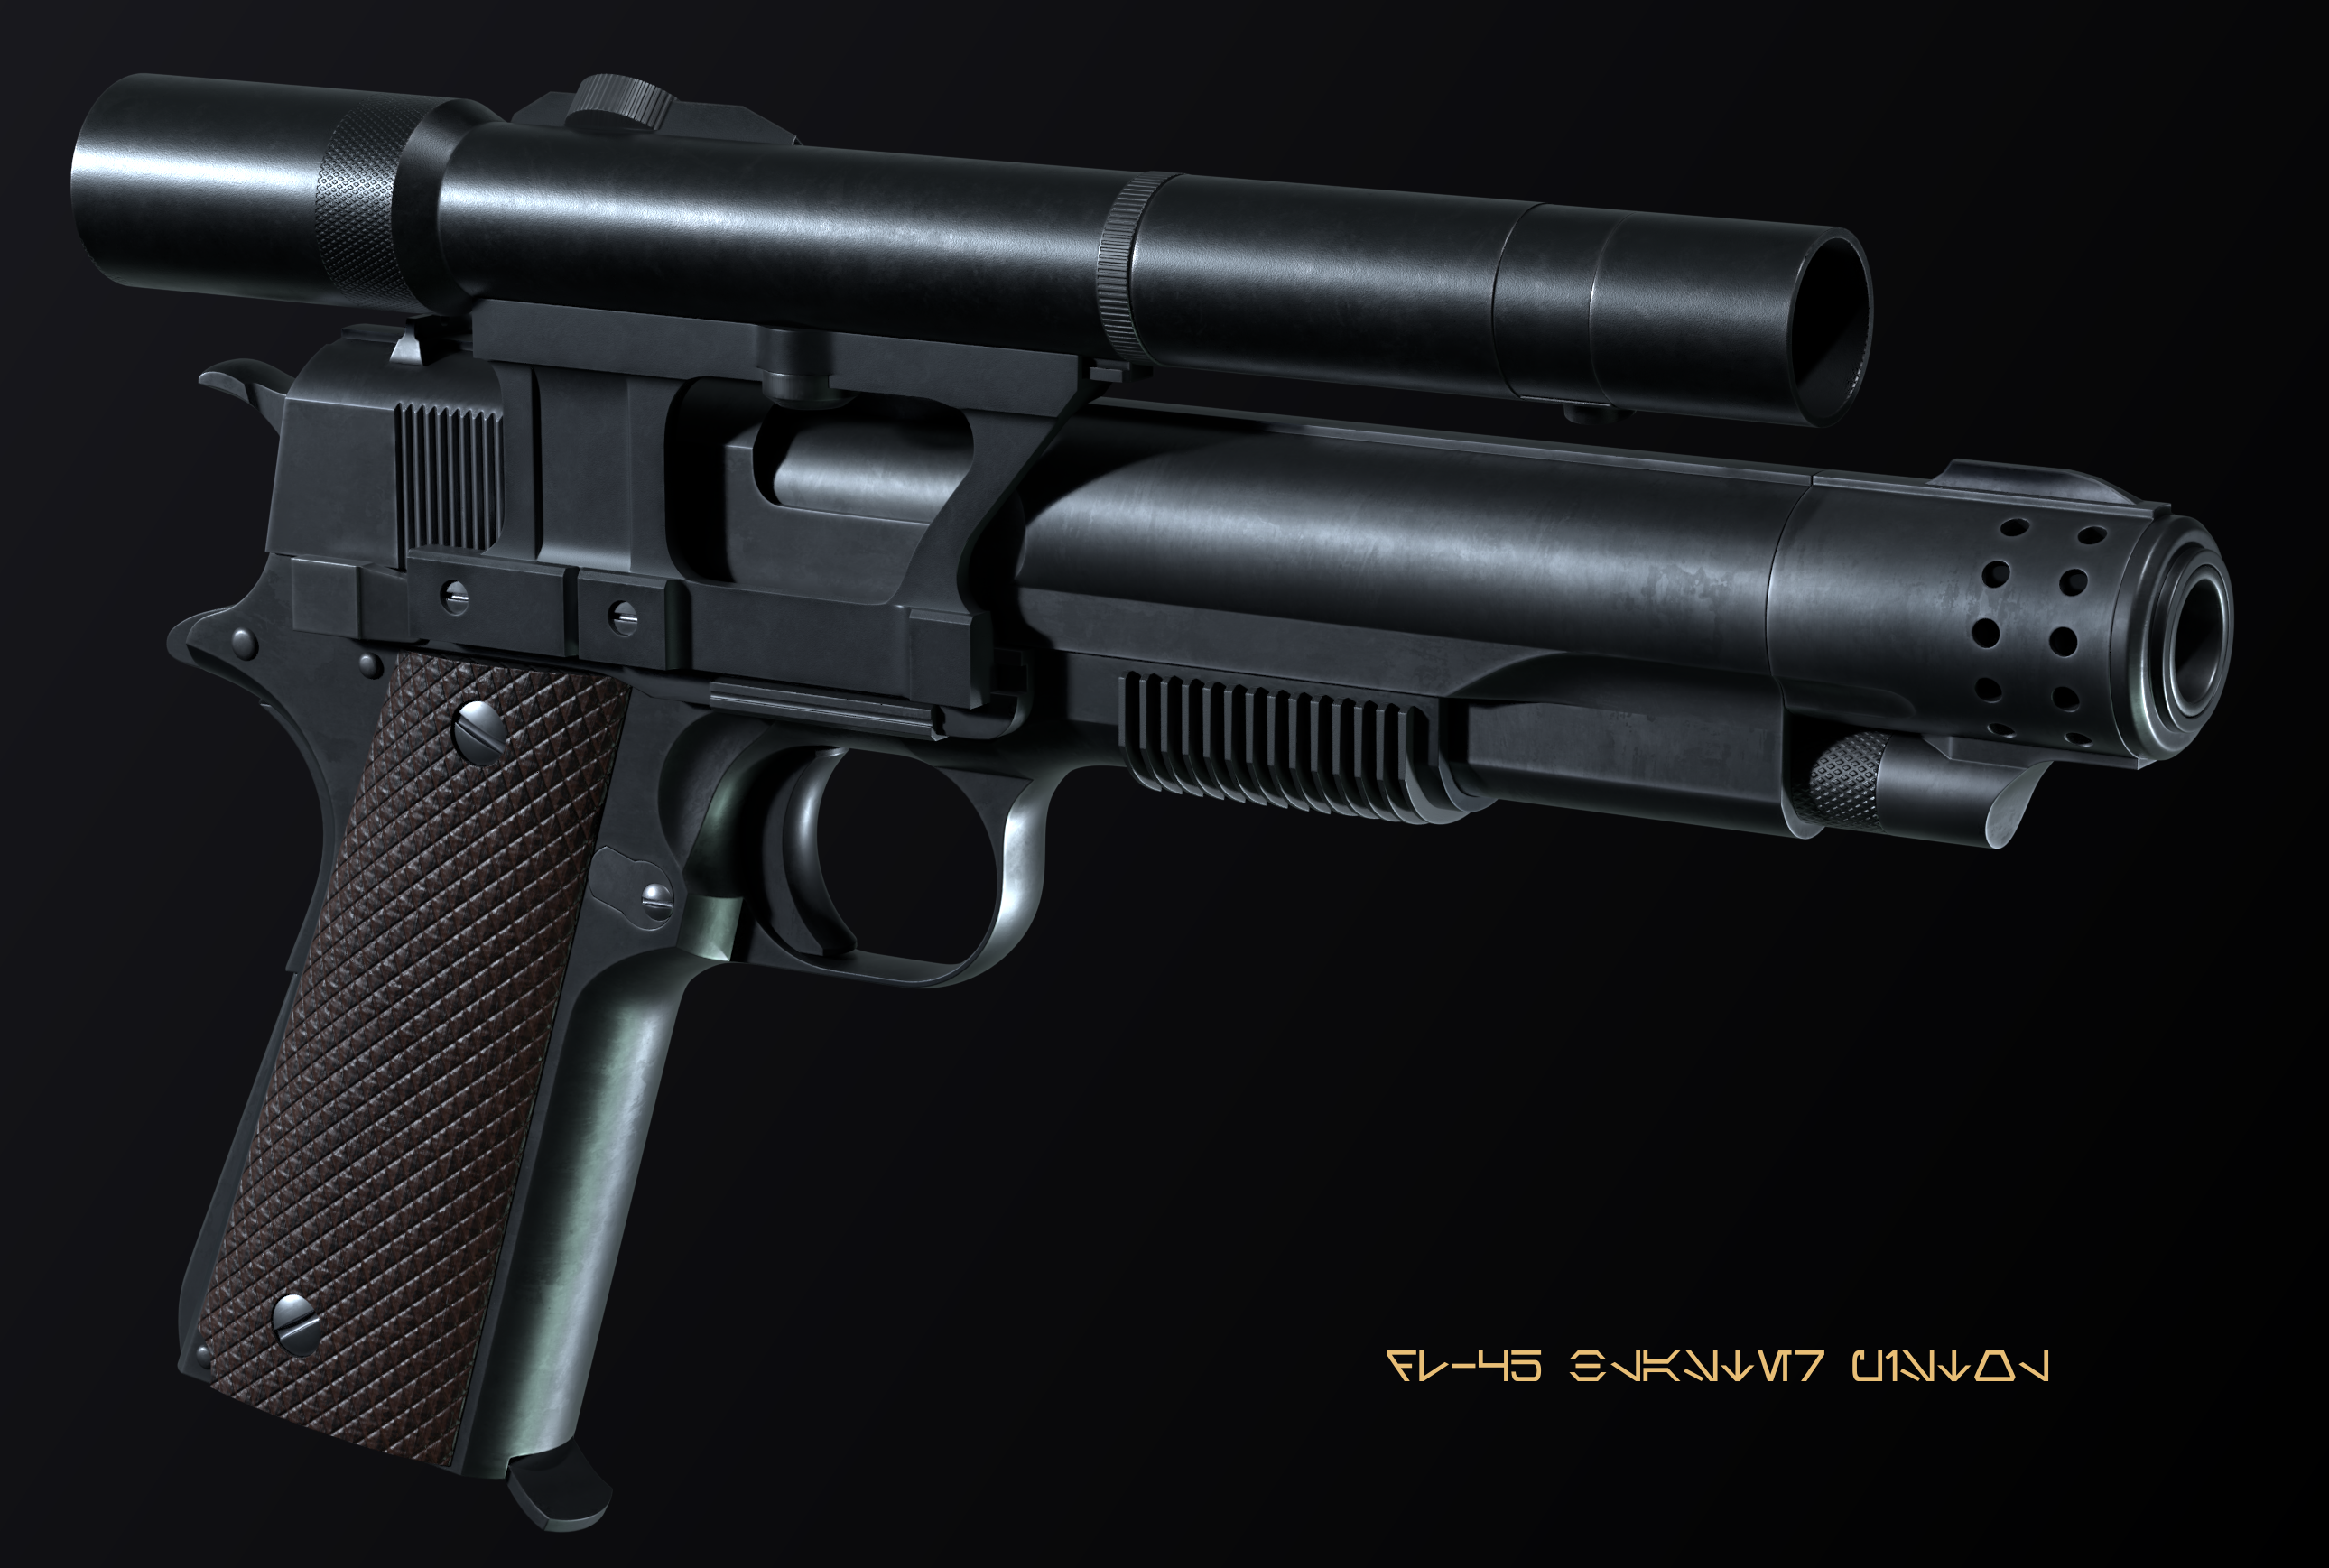 DL-45 blaster pistol (commission) by Hazakhan on DeviantArt